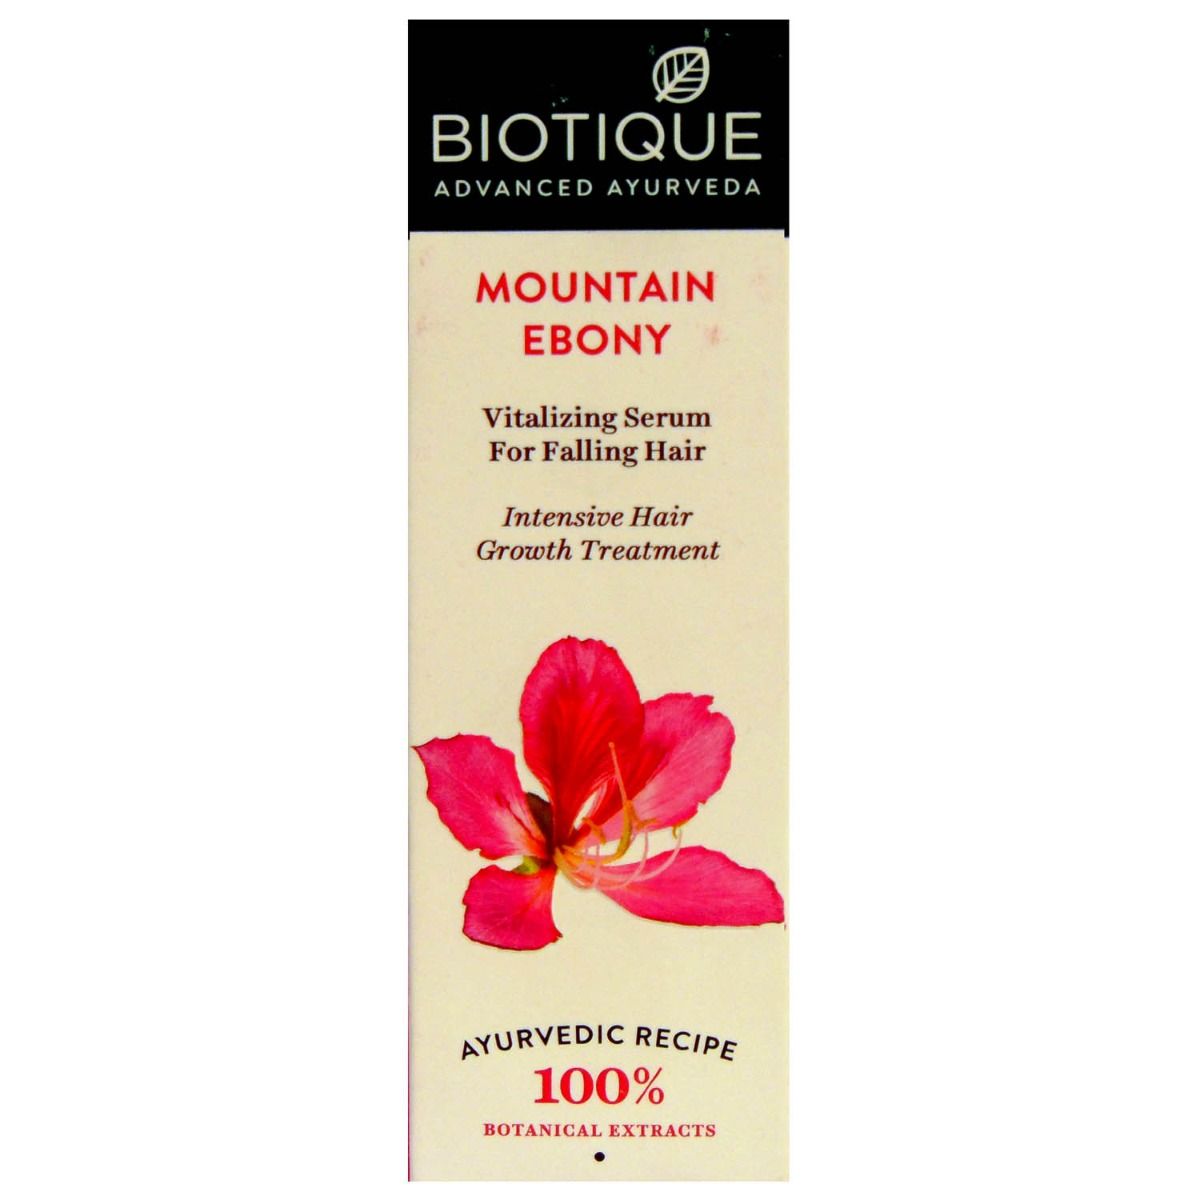 Biotique Mountain Ebony Vitalizing Serum, 120ml Price, Uses, Side Effects,  Composition - Apollo Pharmacy